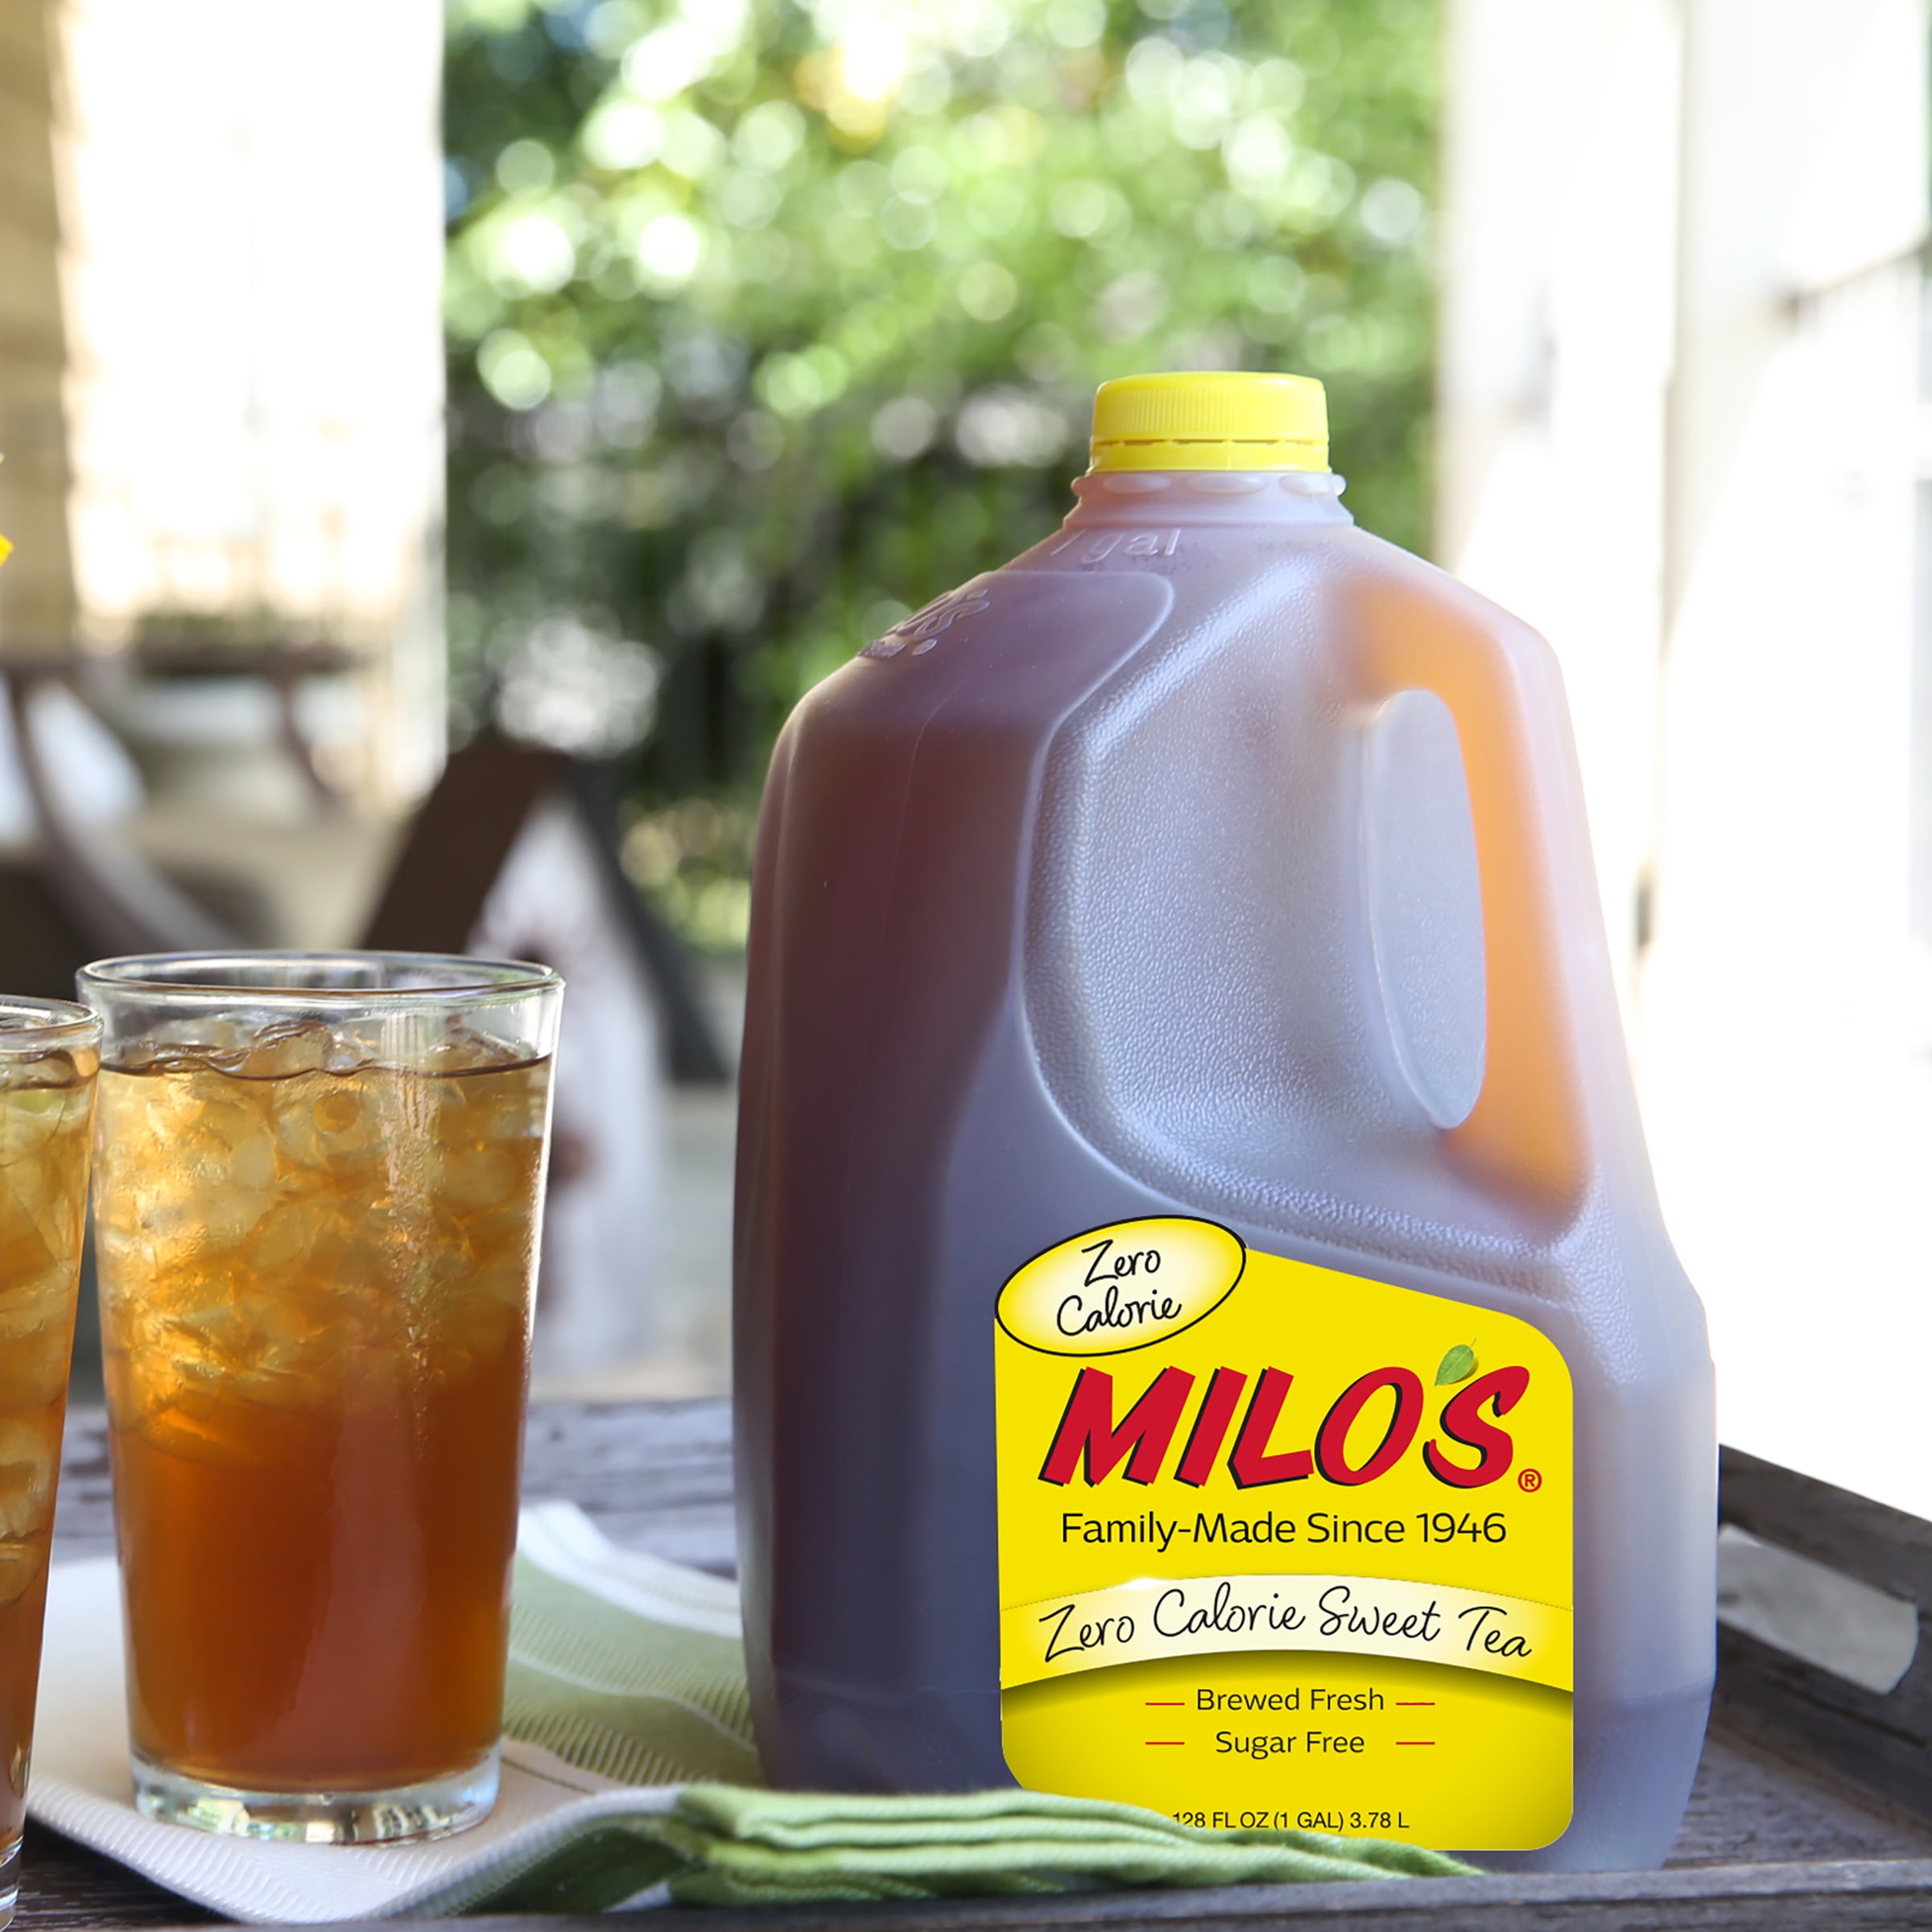 Milo's Zero Calorie Sweet Tea - Sugar Free (Sweetened with Sucralose)